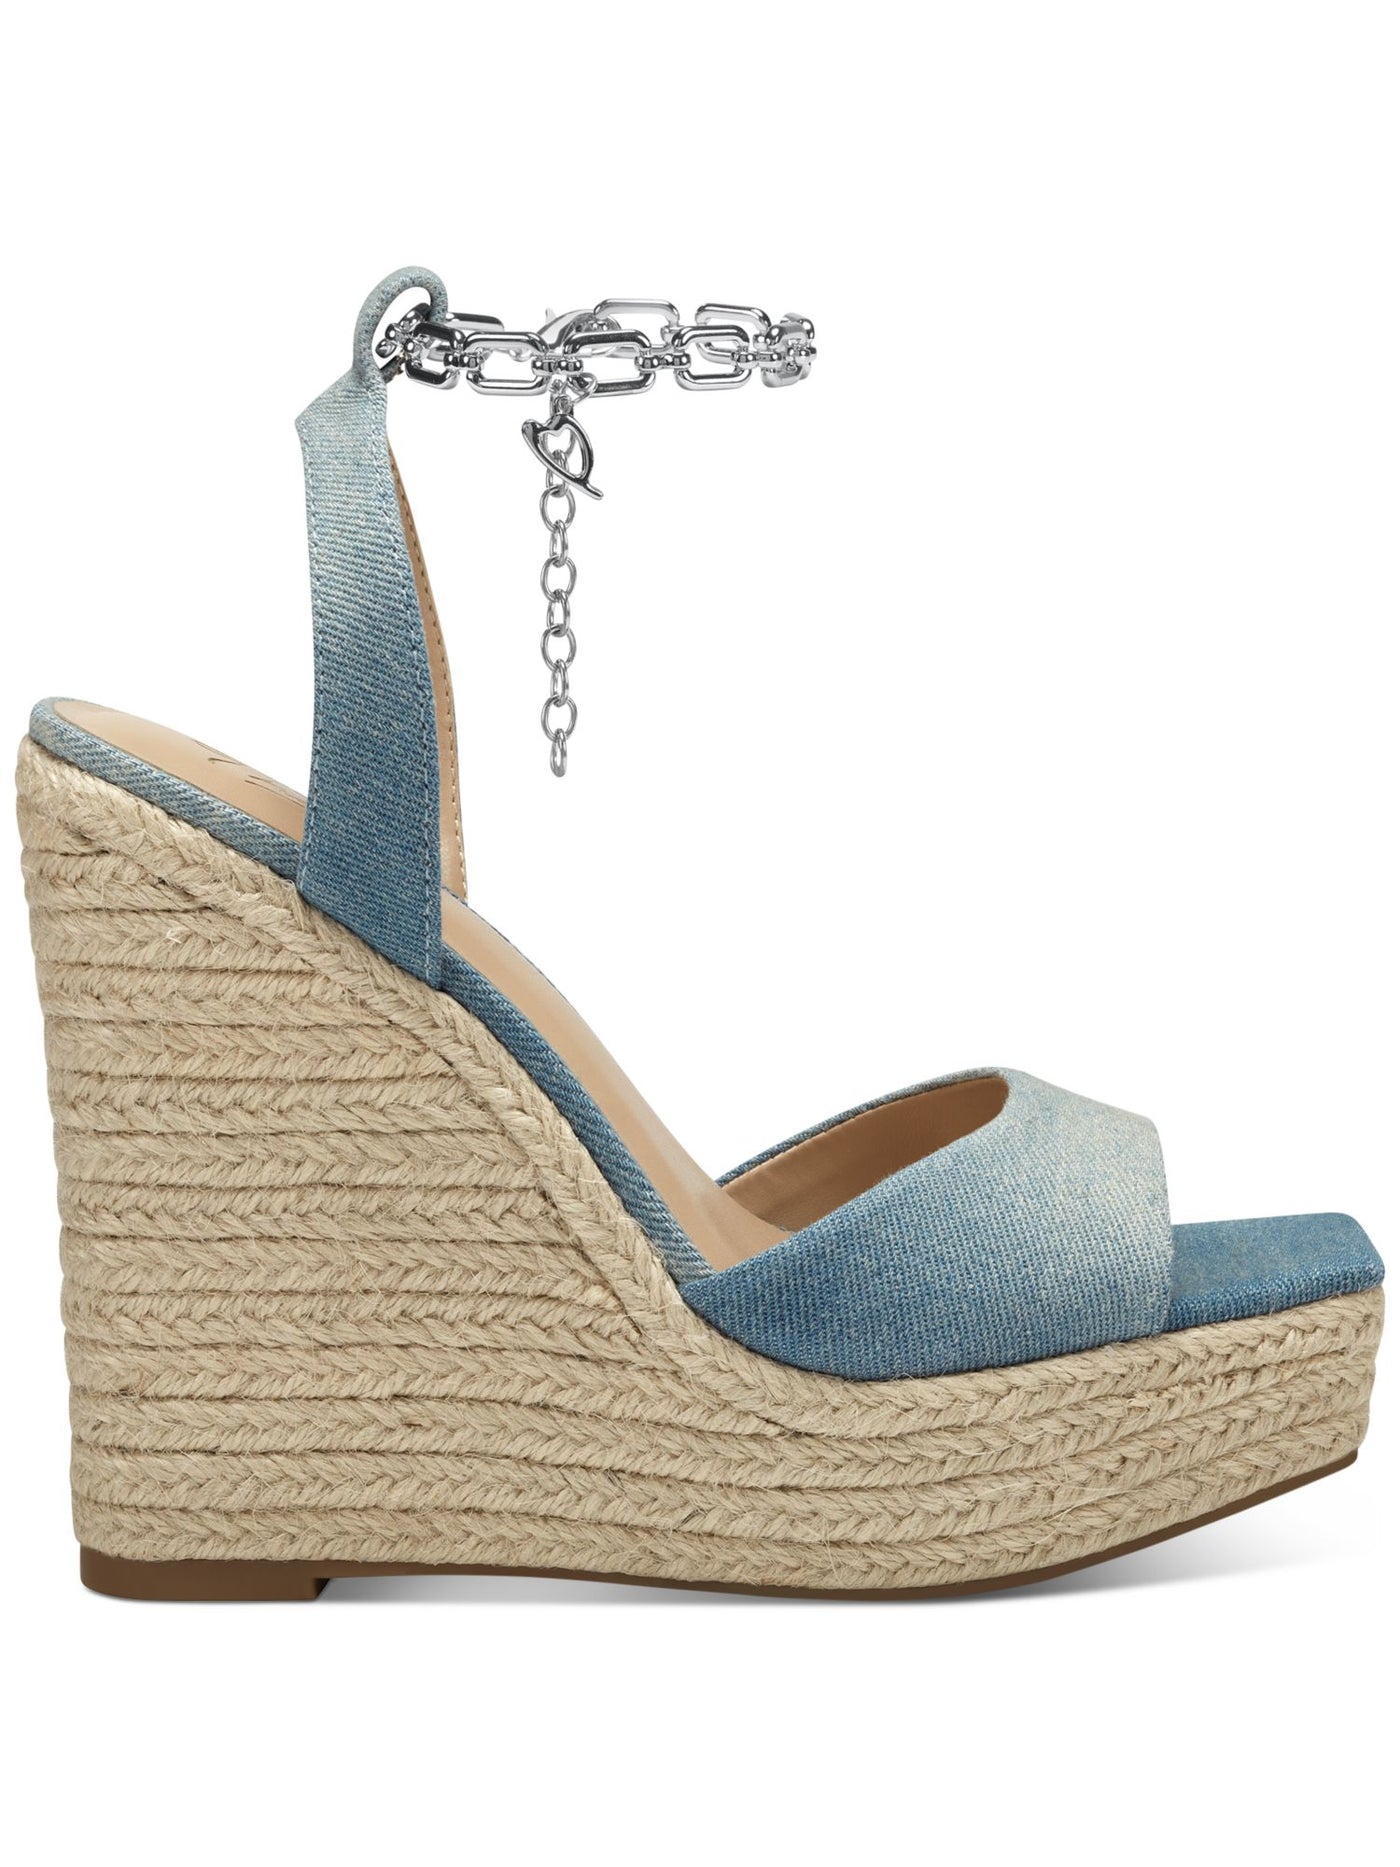 THALIA SODI Womens Blue Denim Clasp Chain 1-1/2" Platform Ankle Strap Caden Square Toe Wedge Slip On Espadrille Shoes 11 M